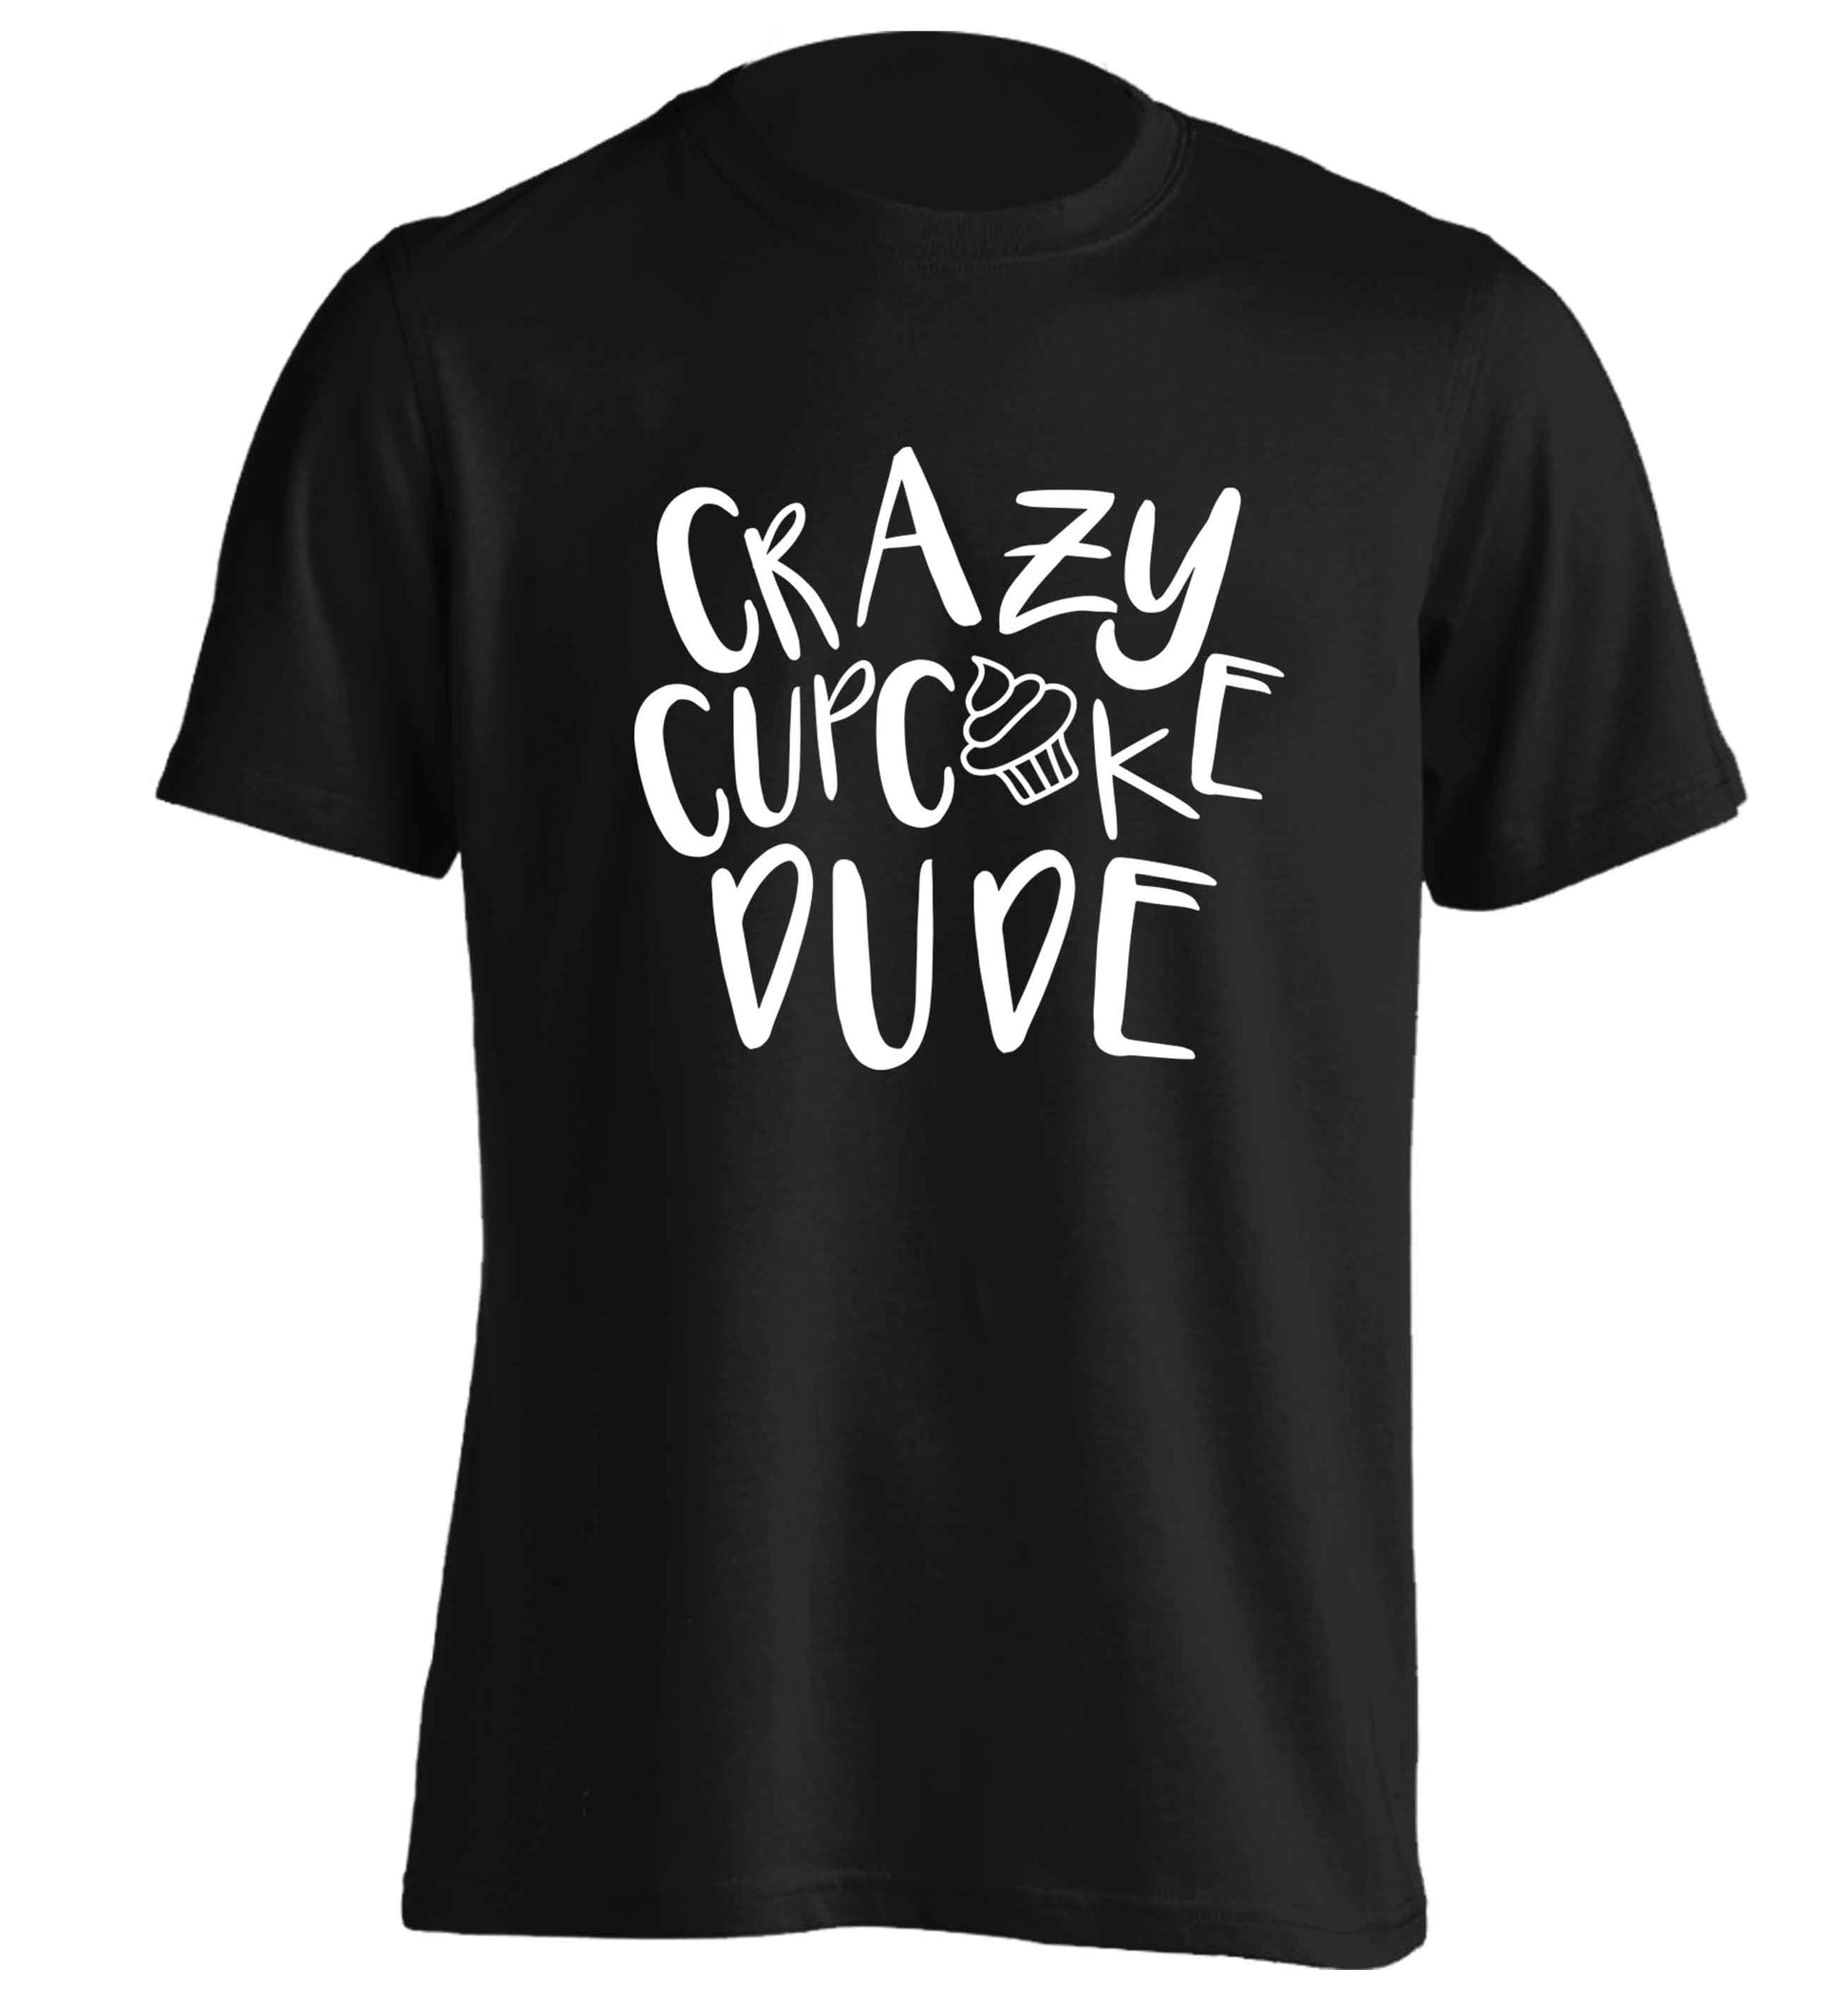 Crazy cupcake dude adults unisex black Tshirt 2XL